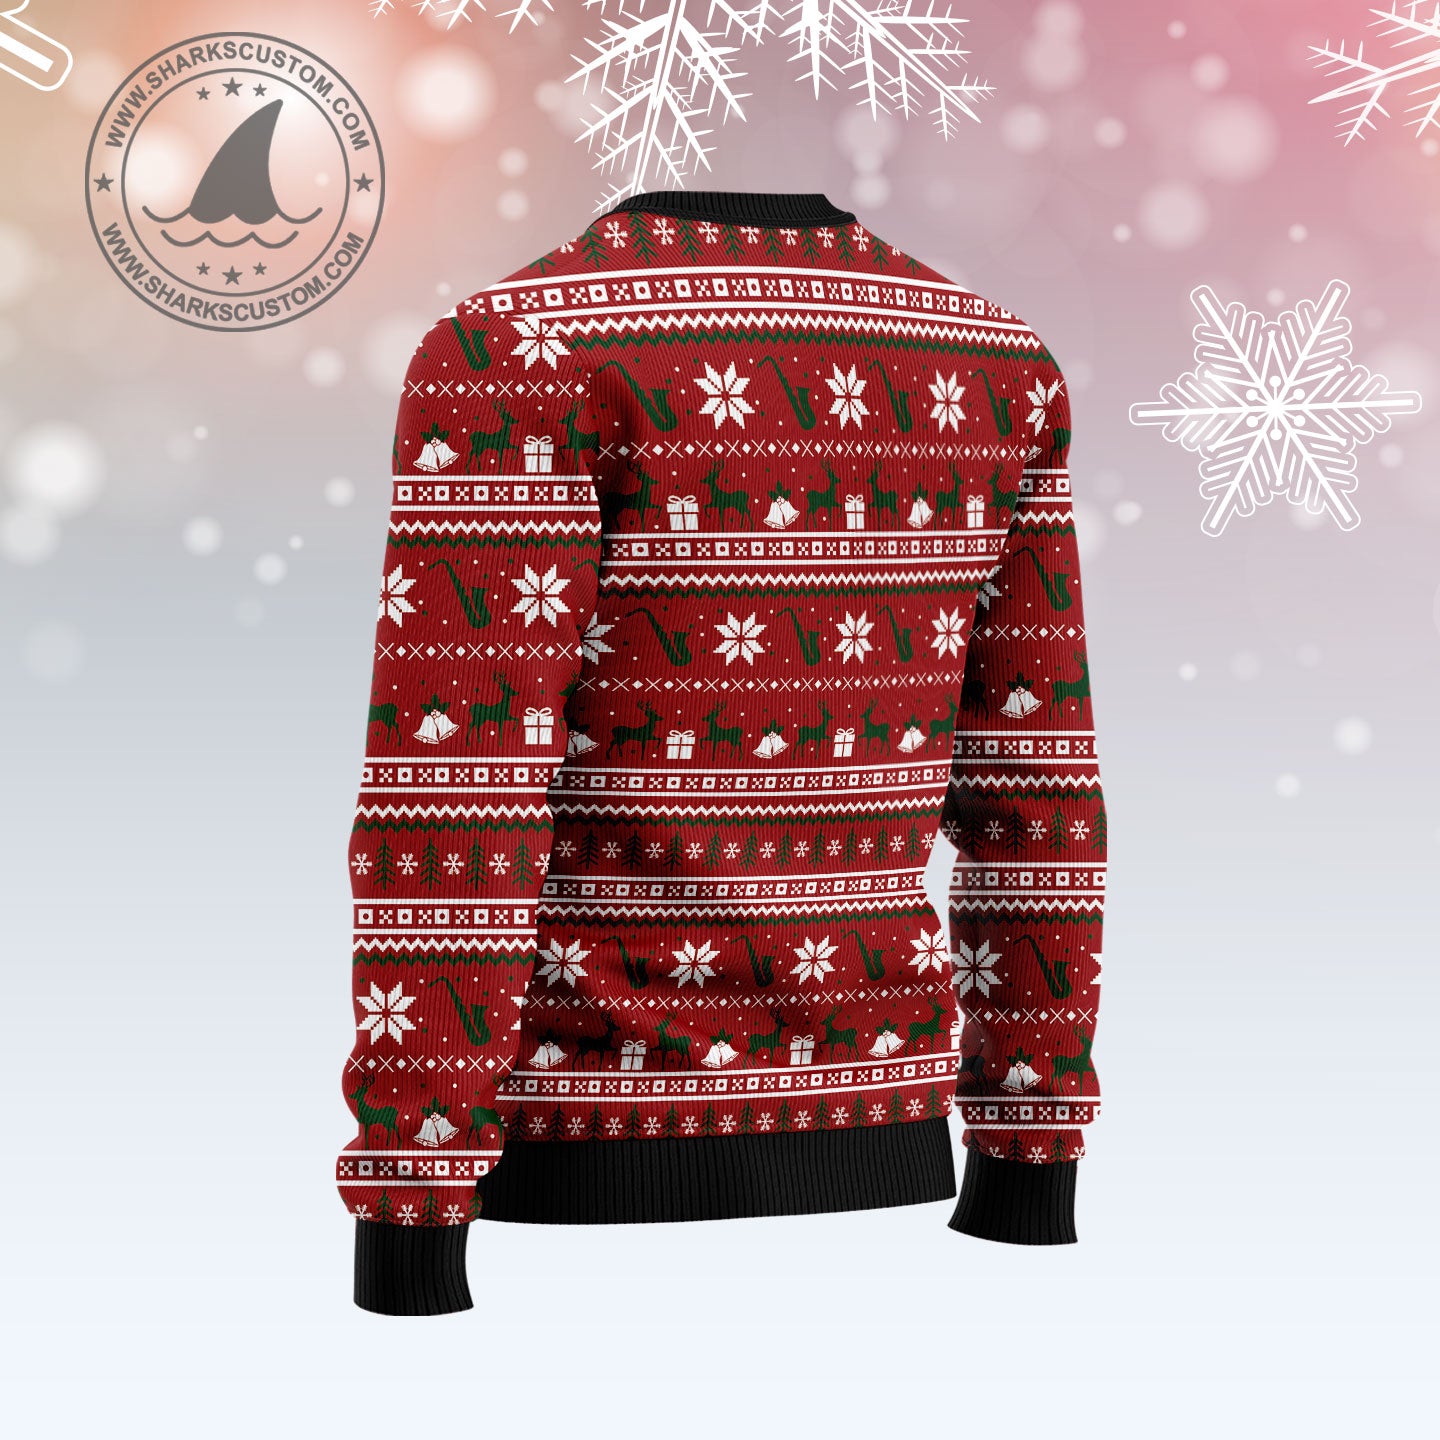 Saxy Holidays Saxophone G51023 Ugly Christmas Sweater